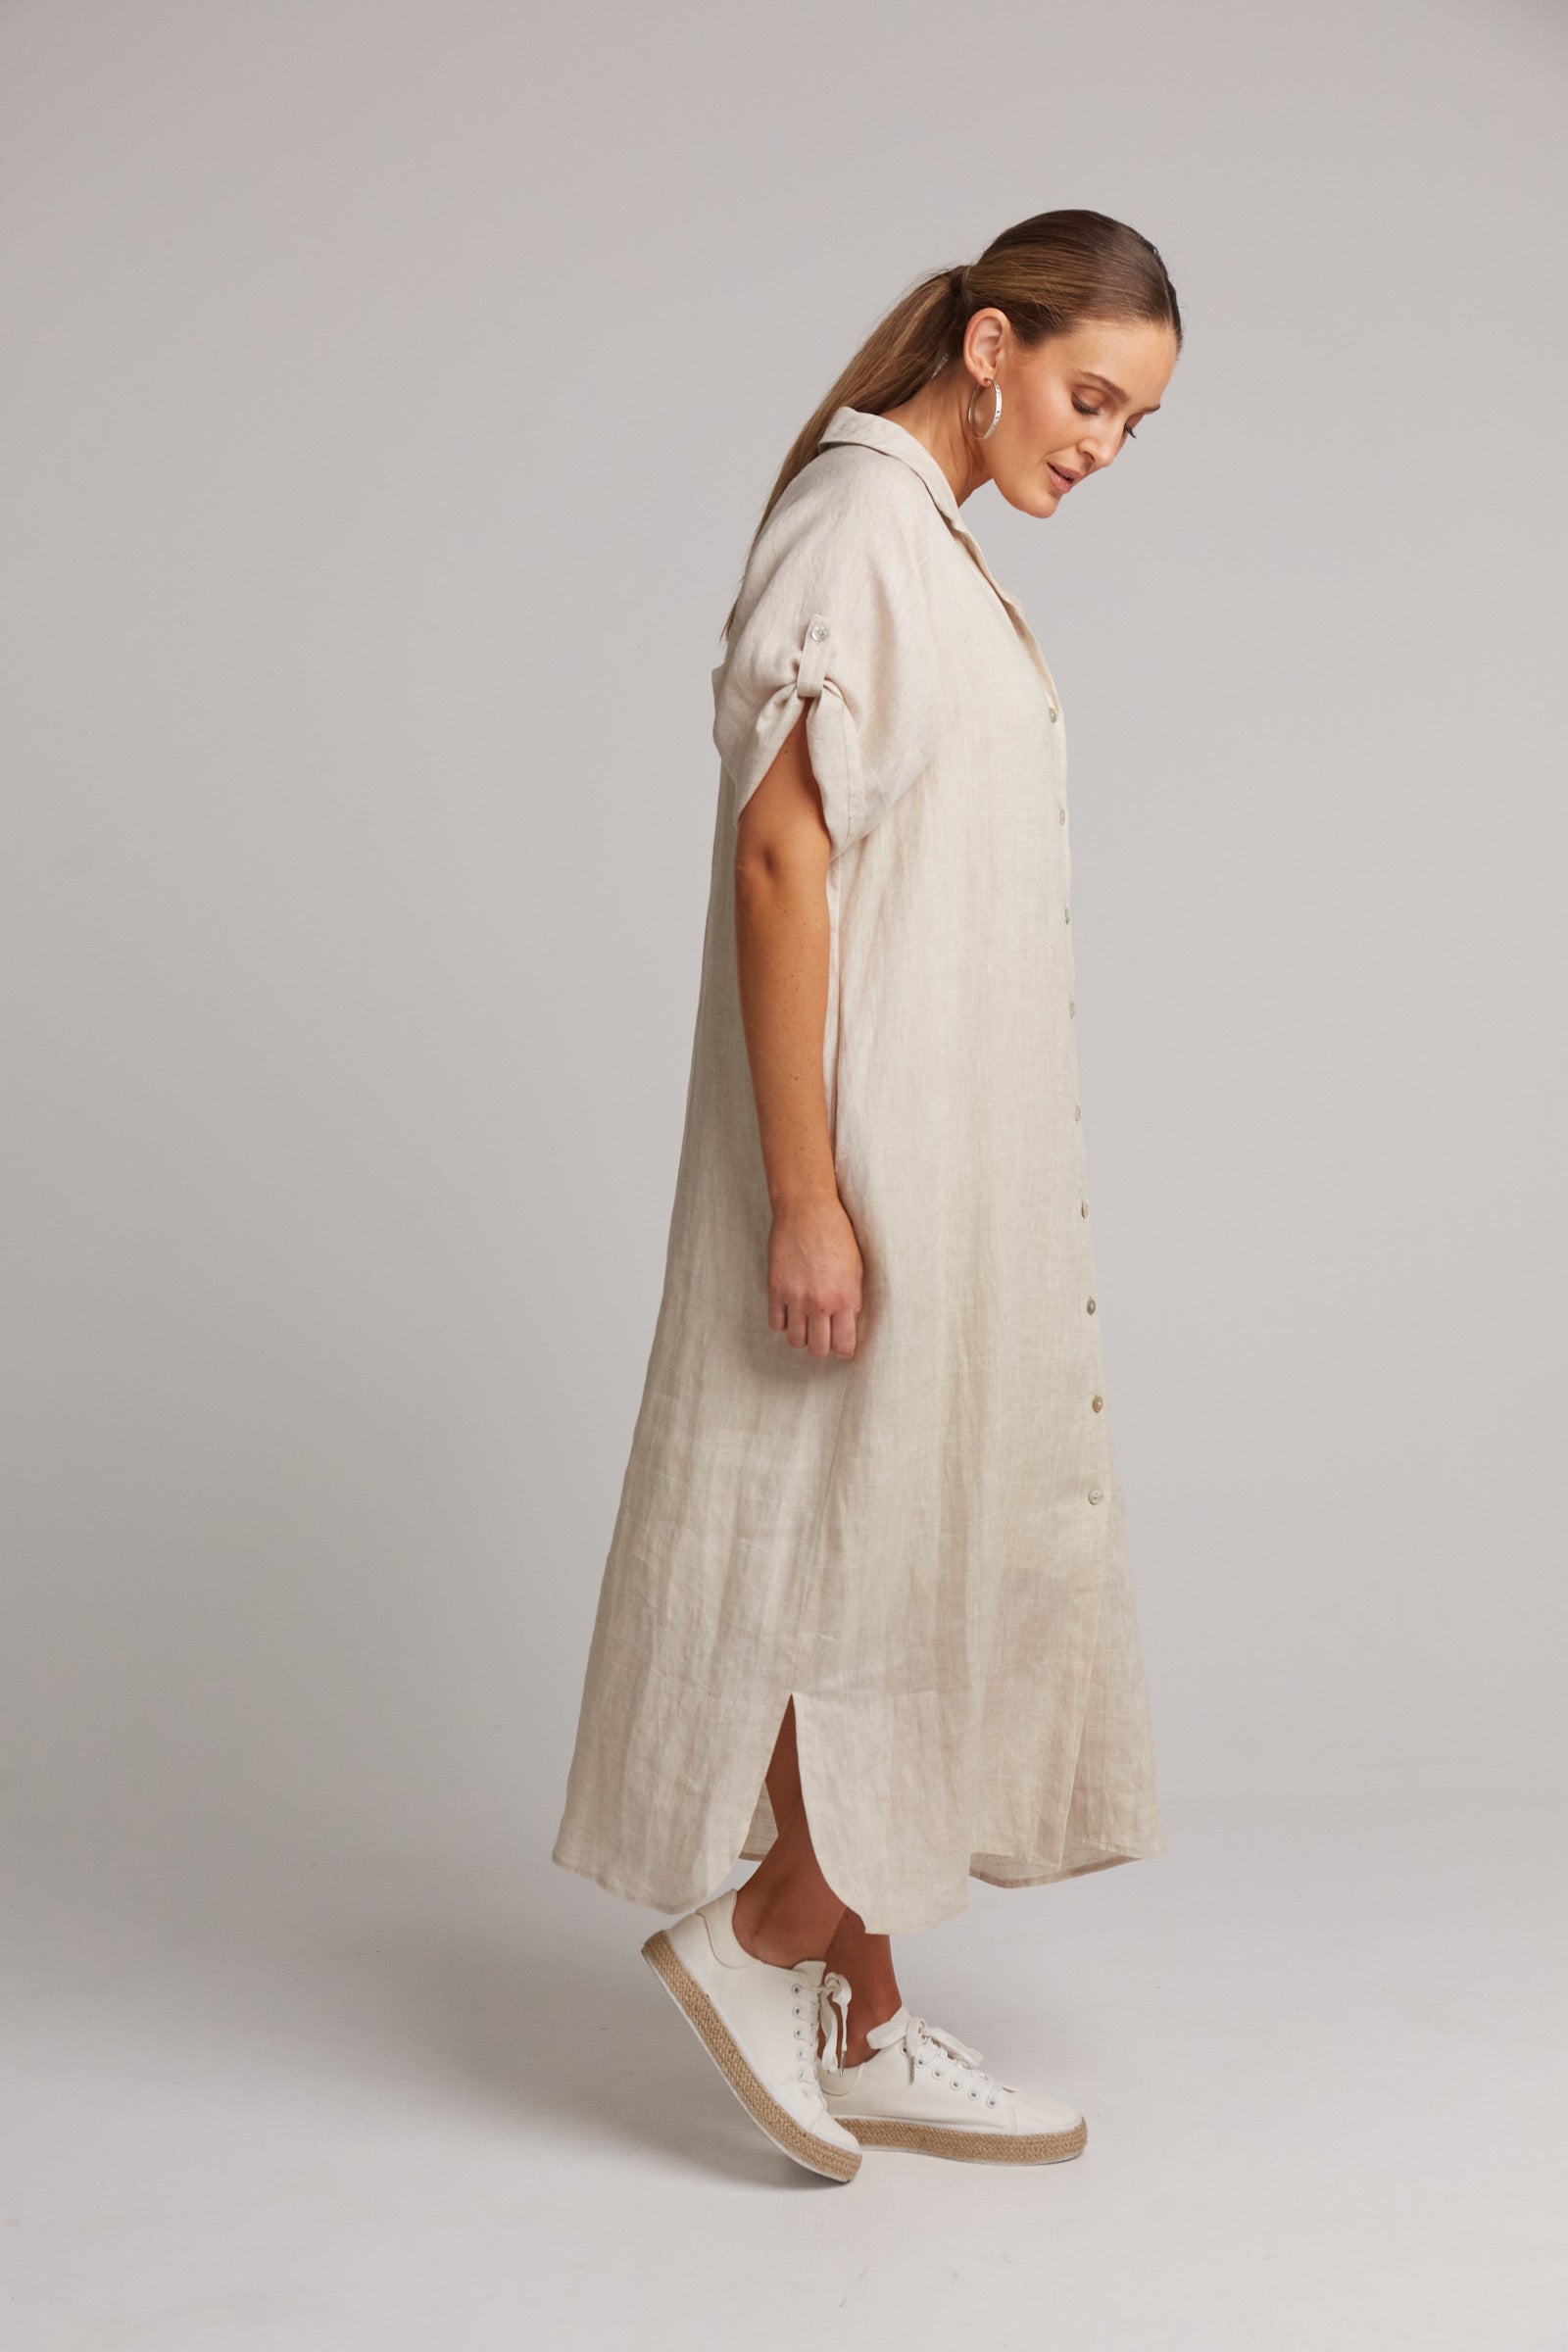 Studio Shirt Dress - Tusk - eb&ive Clothing - Shirt Dress Mid Linen